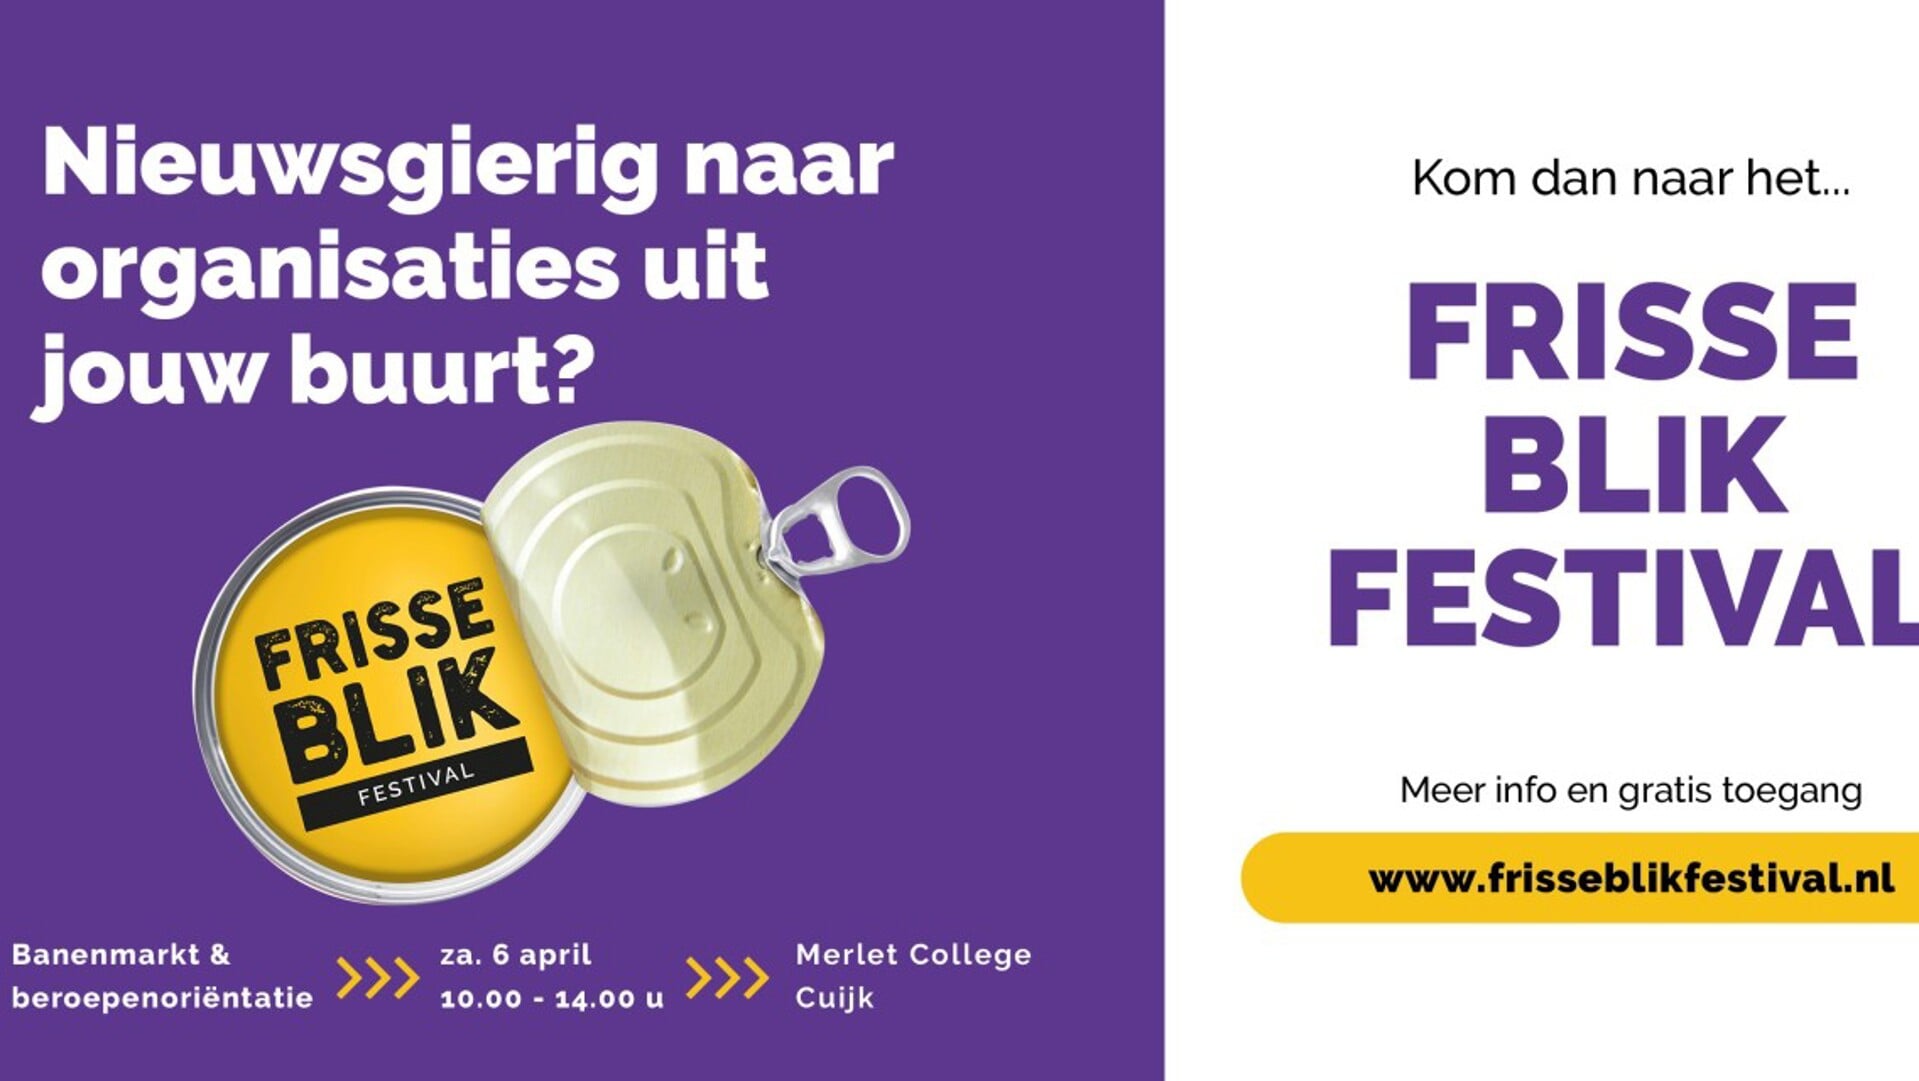 Frisse Blik Festival, zaterdag 6 april, Merlet College in Cuijk.